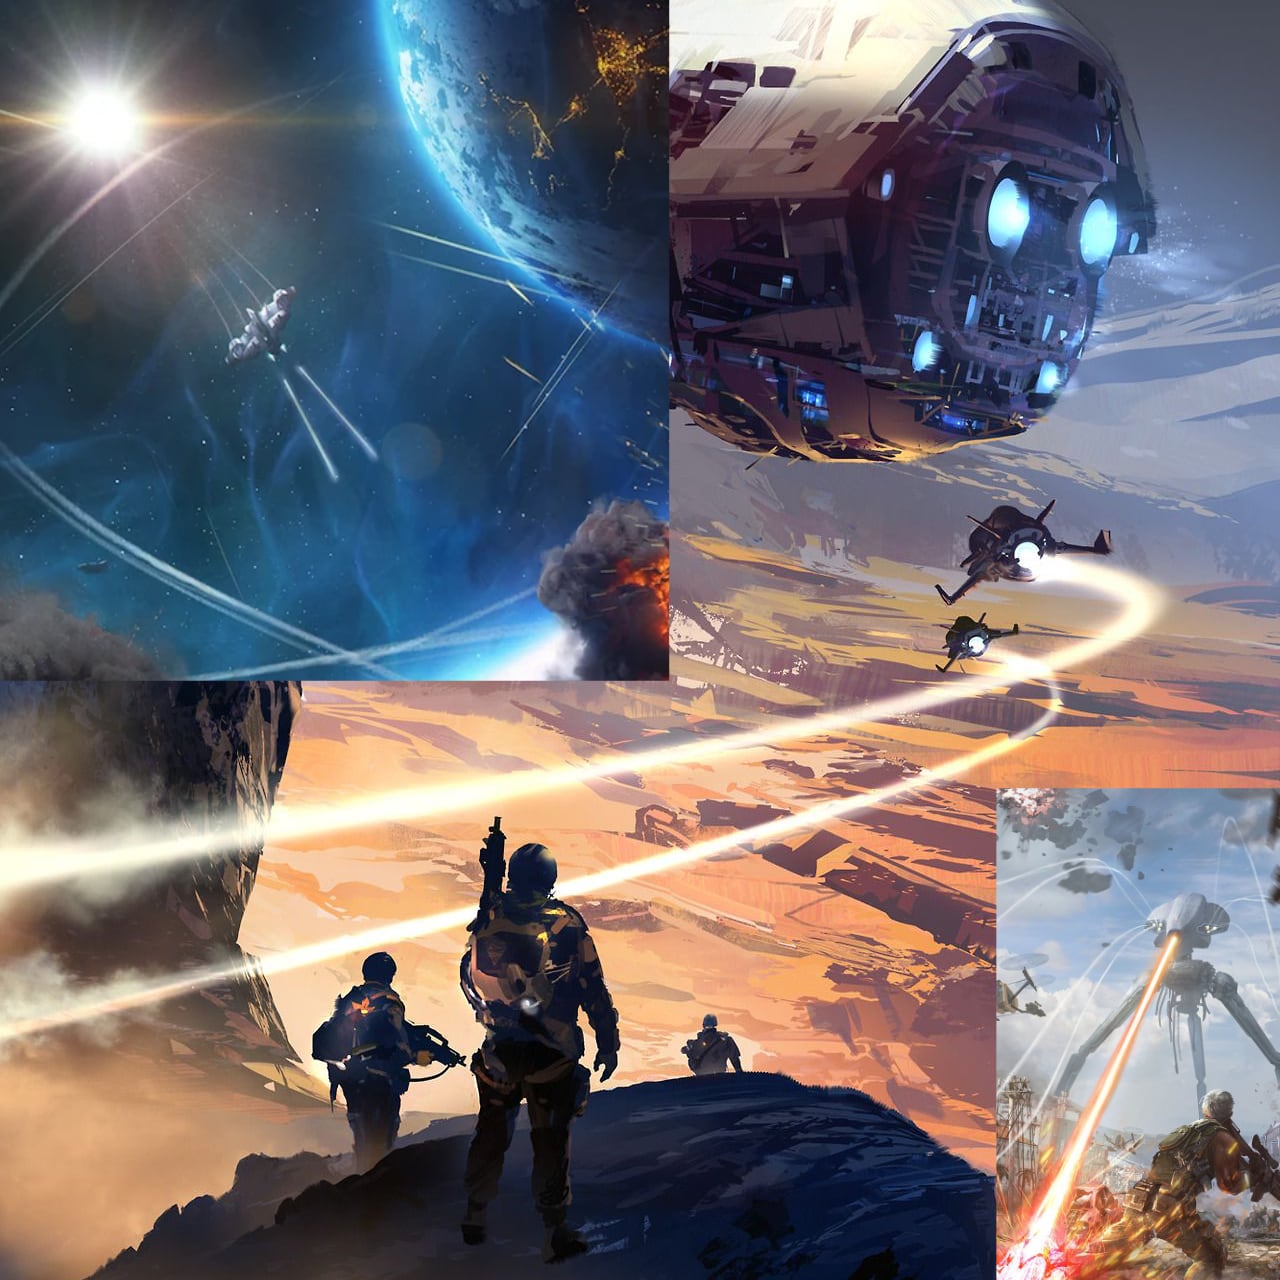 Starships in battle, defenders on land, explorers surveying the alien landscape.